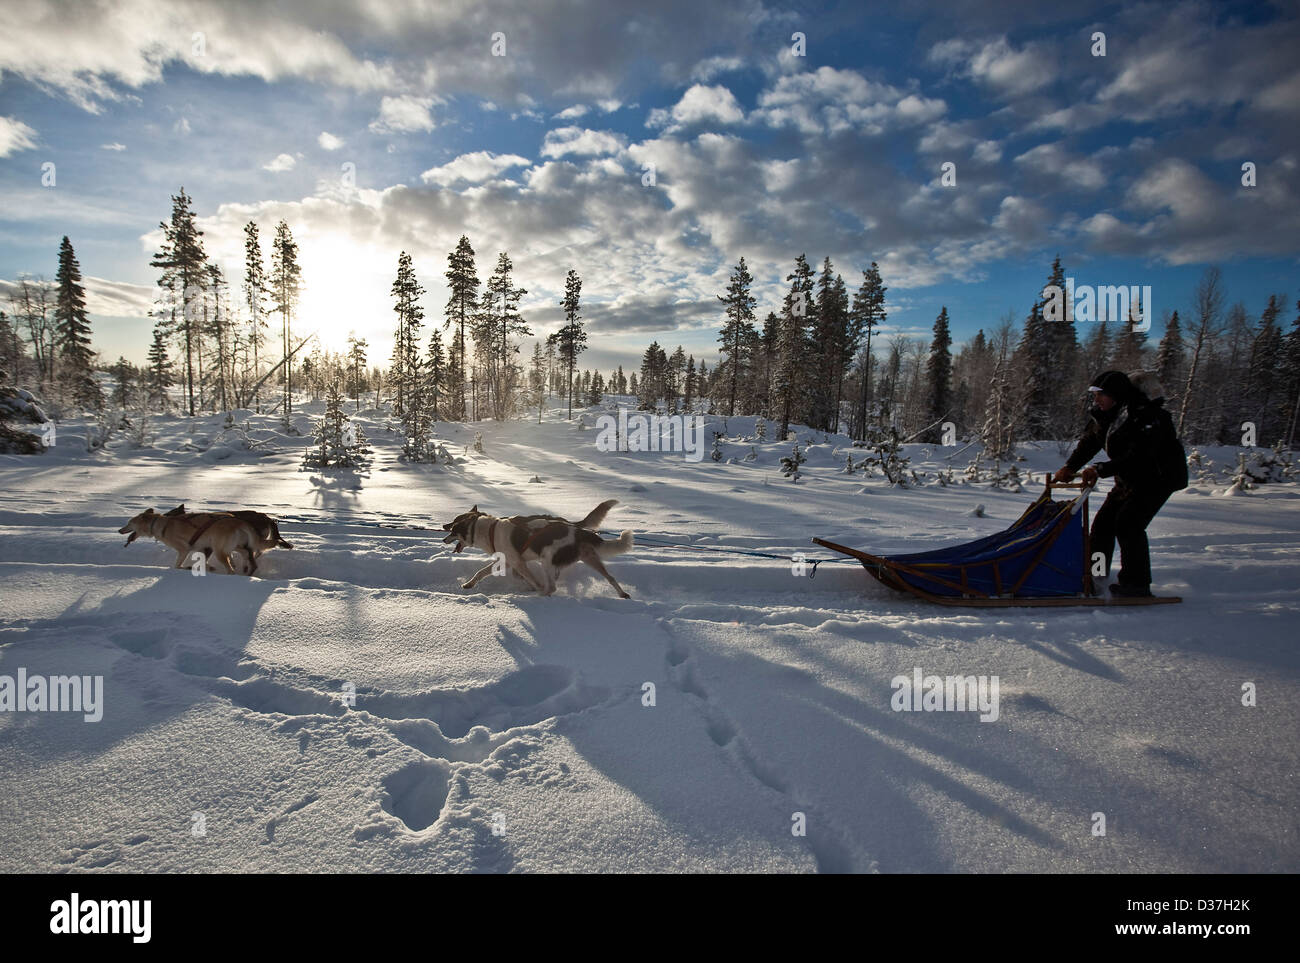 Huskies pulling sled along snow, Lapland Stock Photo